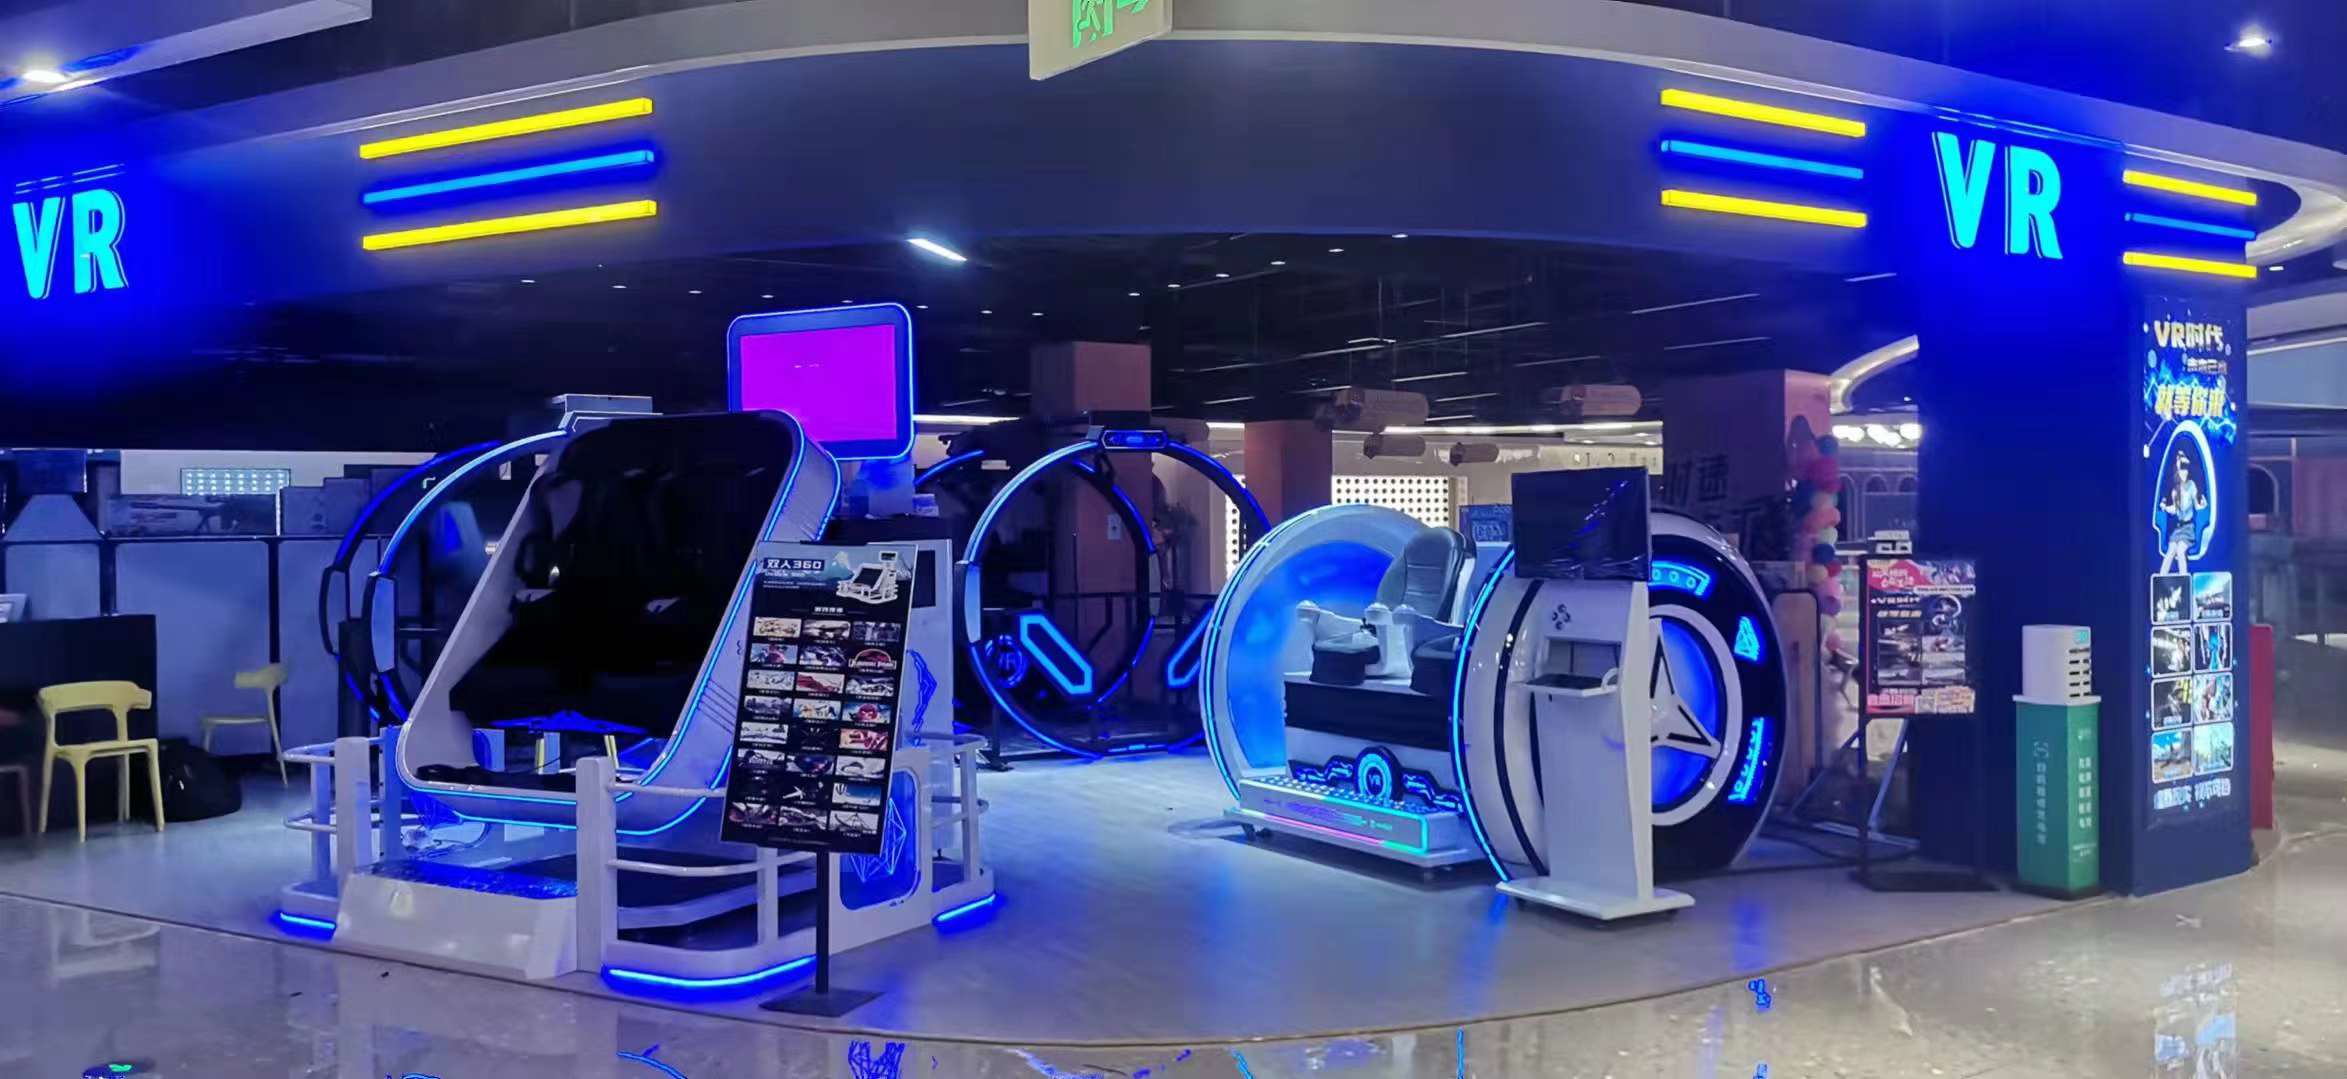 2022 New 9D Motion Flight Simulator Chair Family Recreation 9D Fight Games VR Simulator Flying Machine